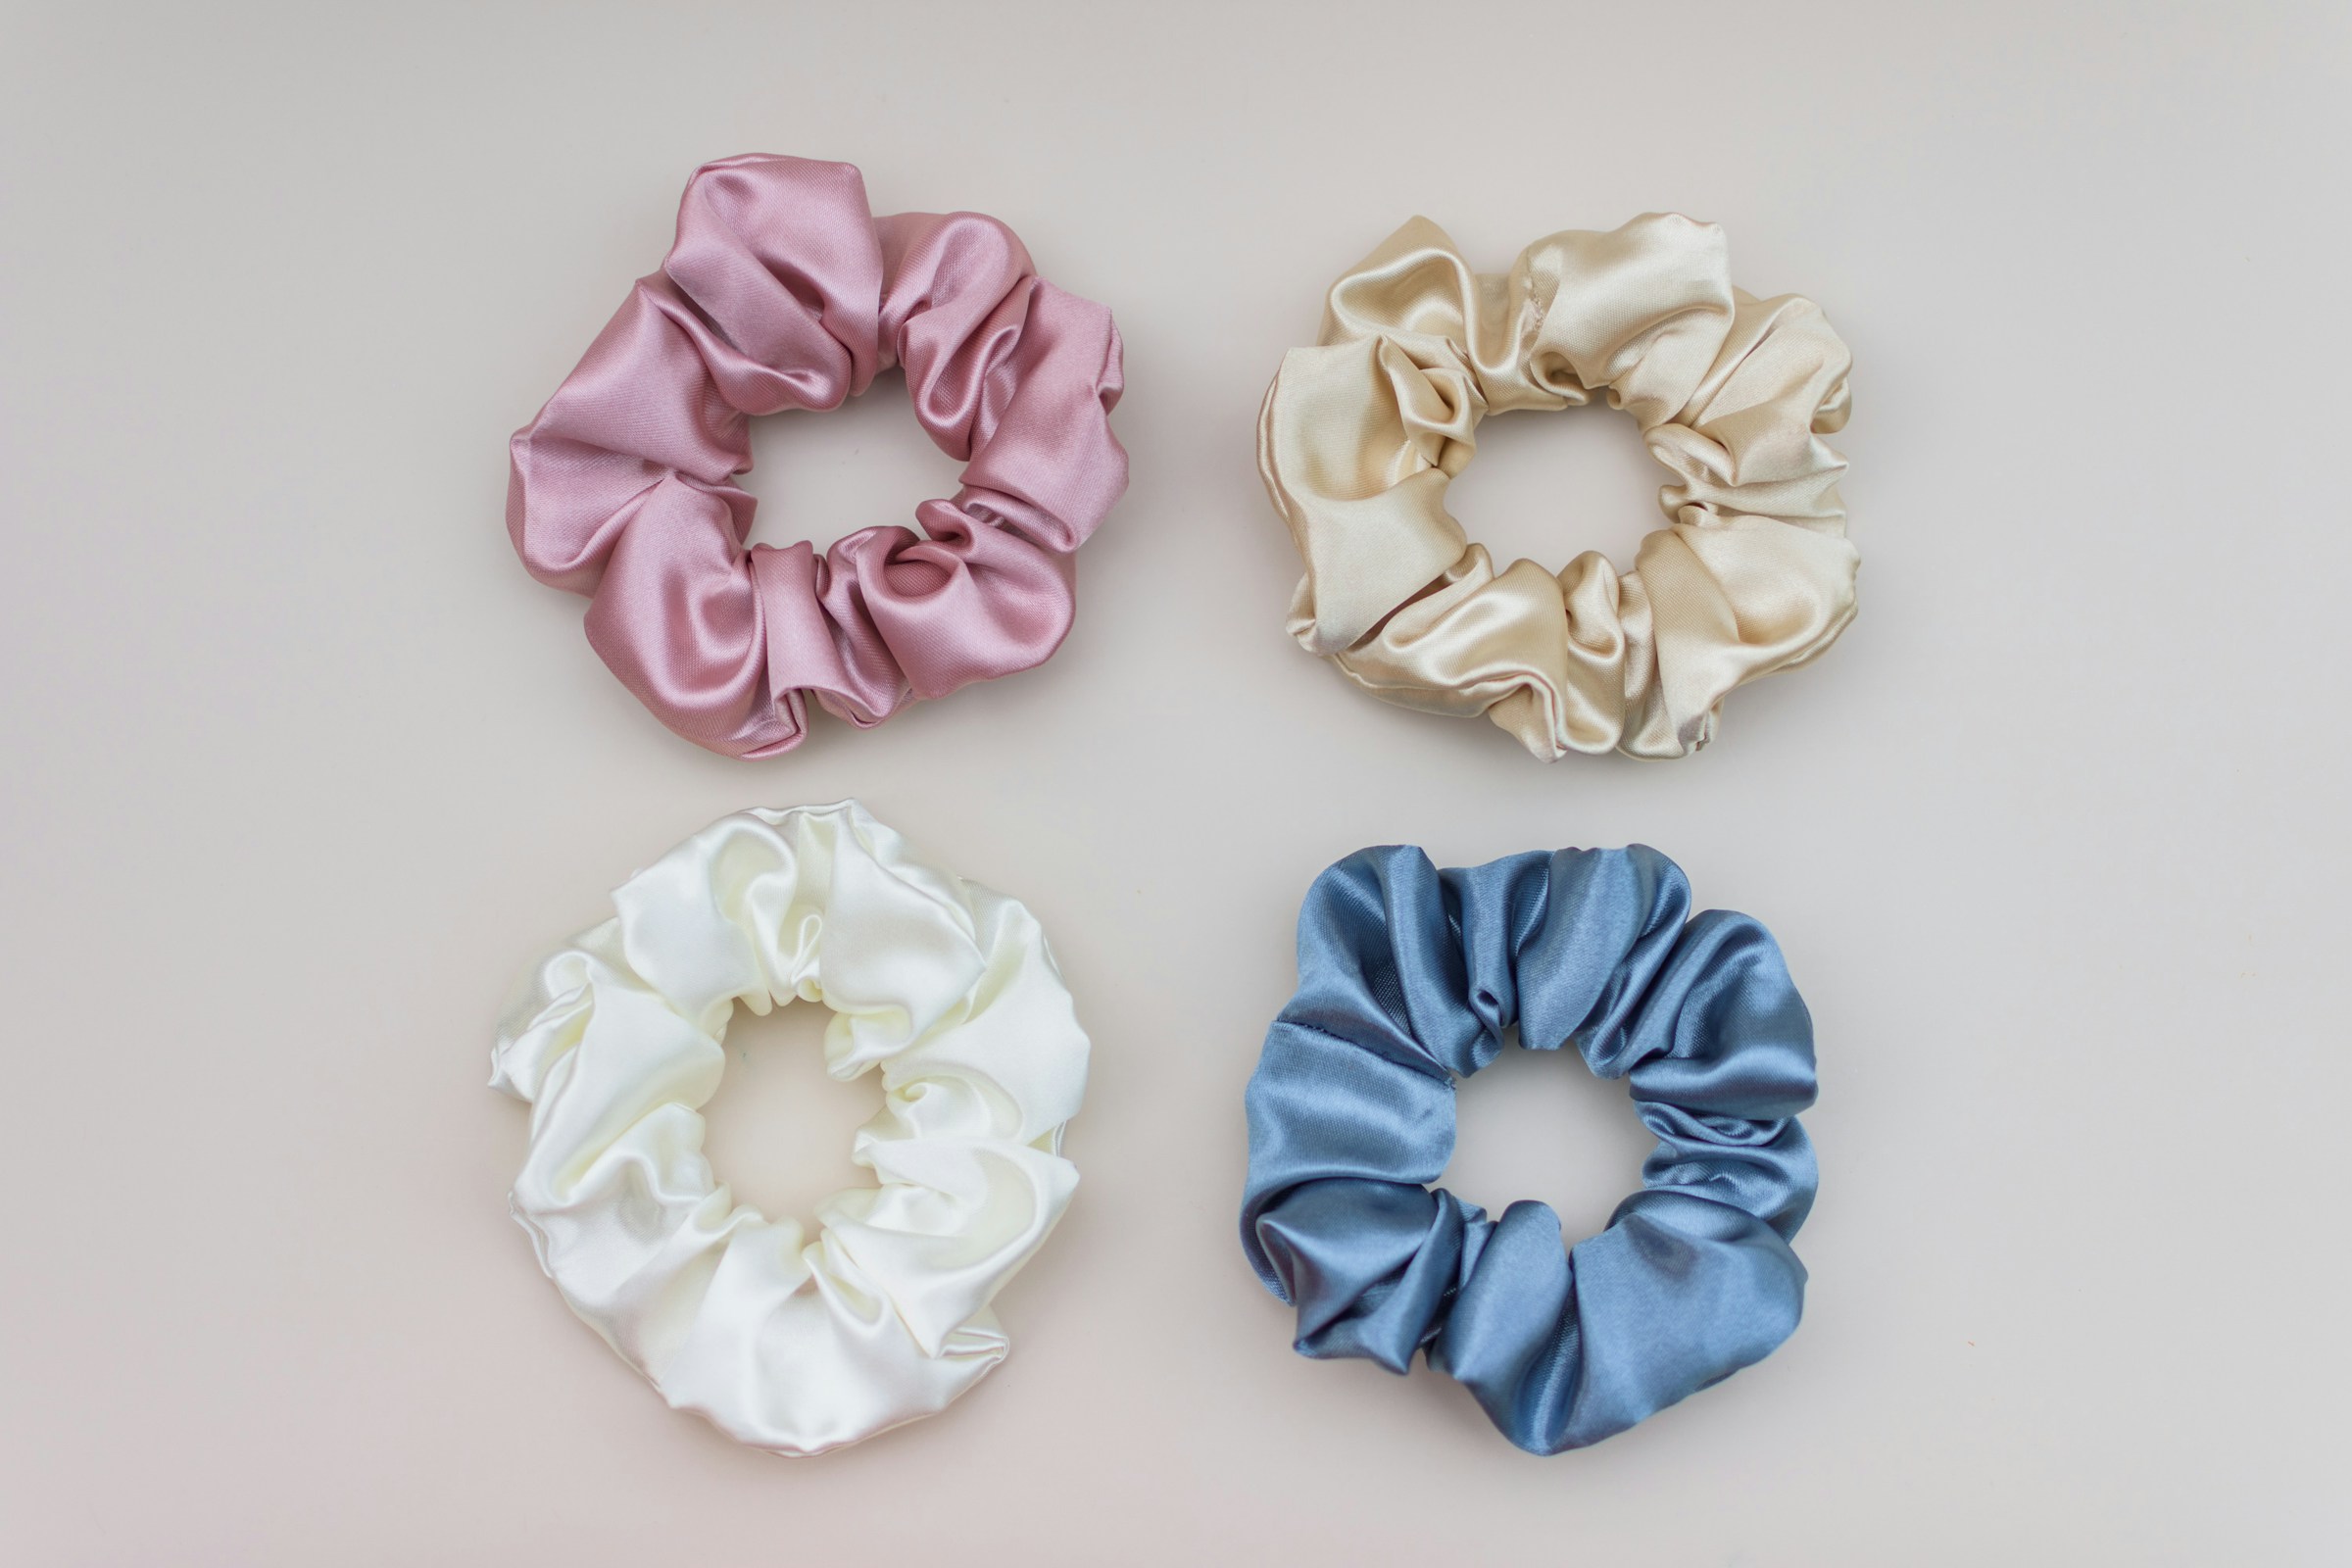 Four colorful hair scrunchies | Source: Pexels